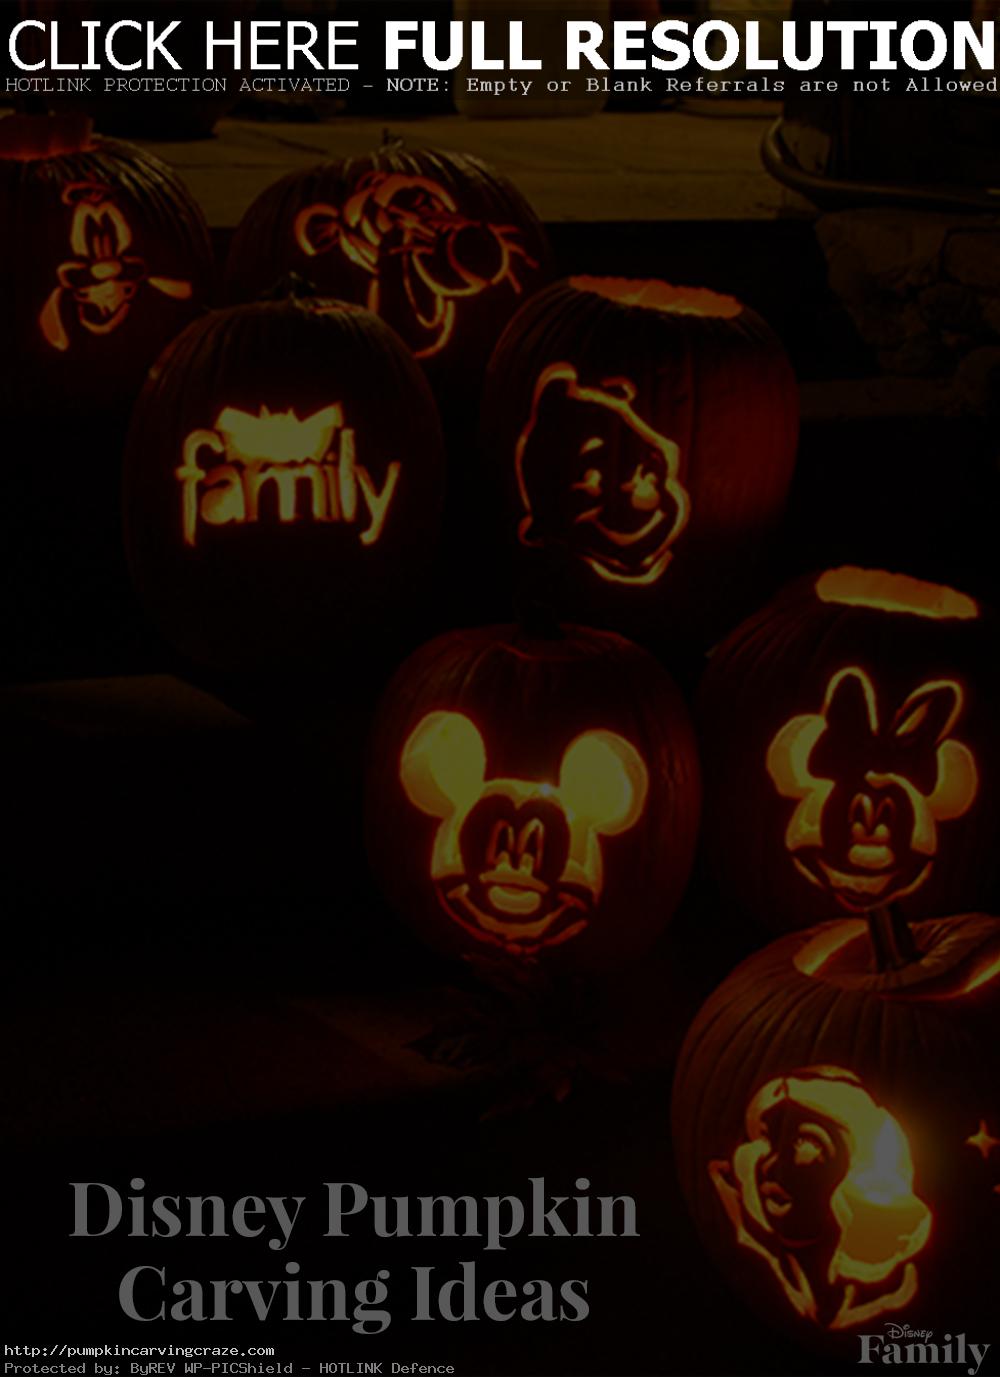 Disney Pumpkin carving